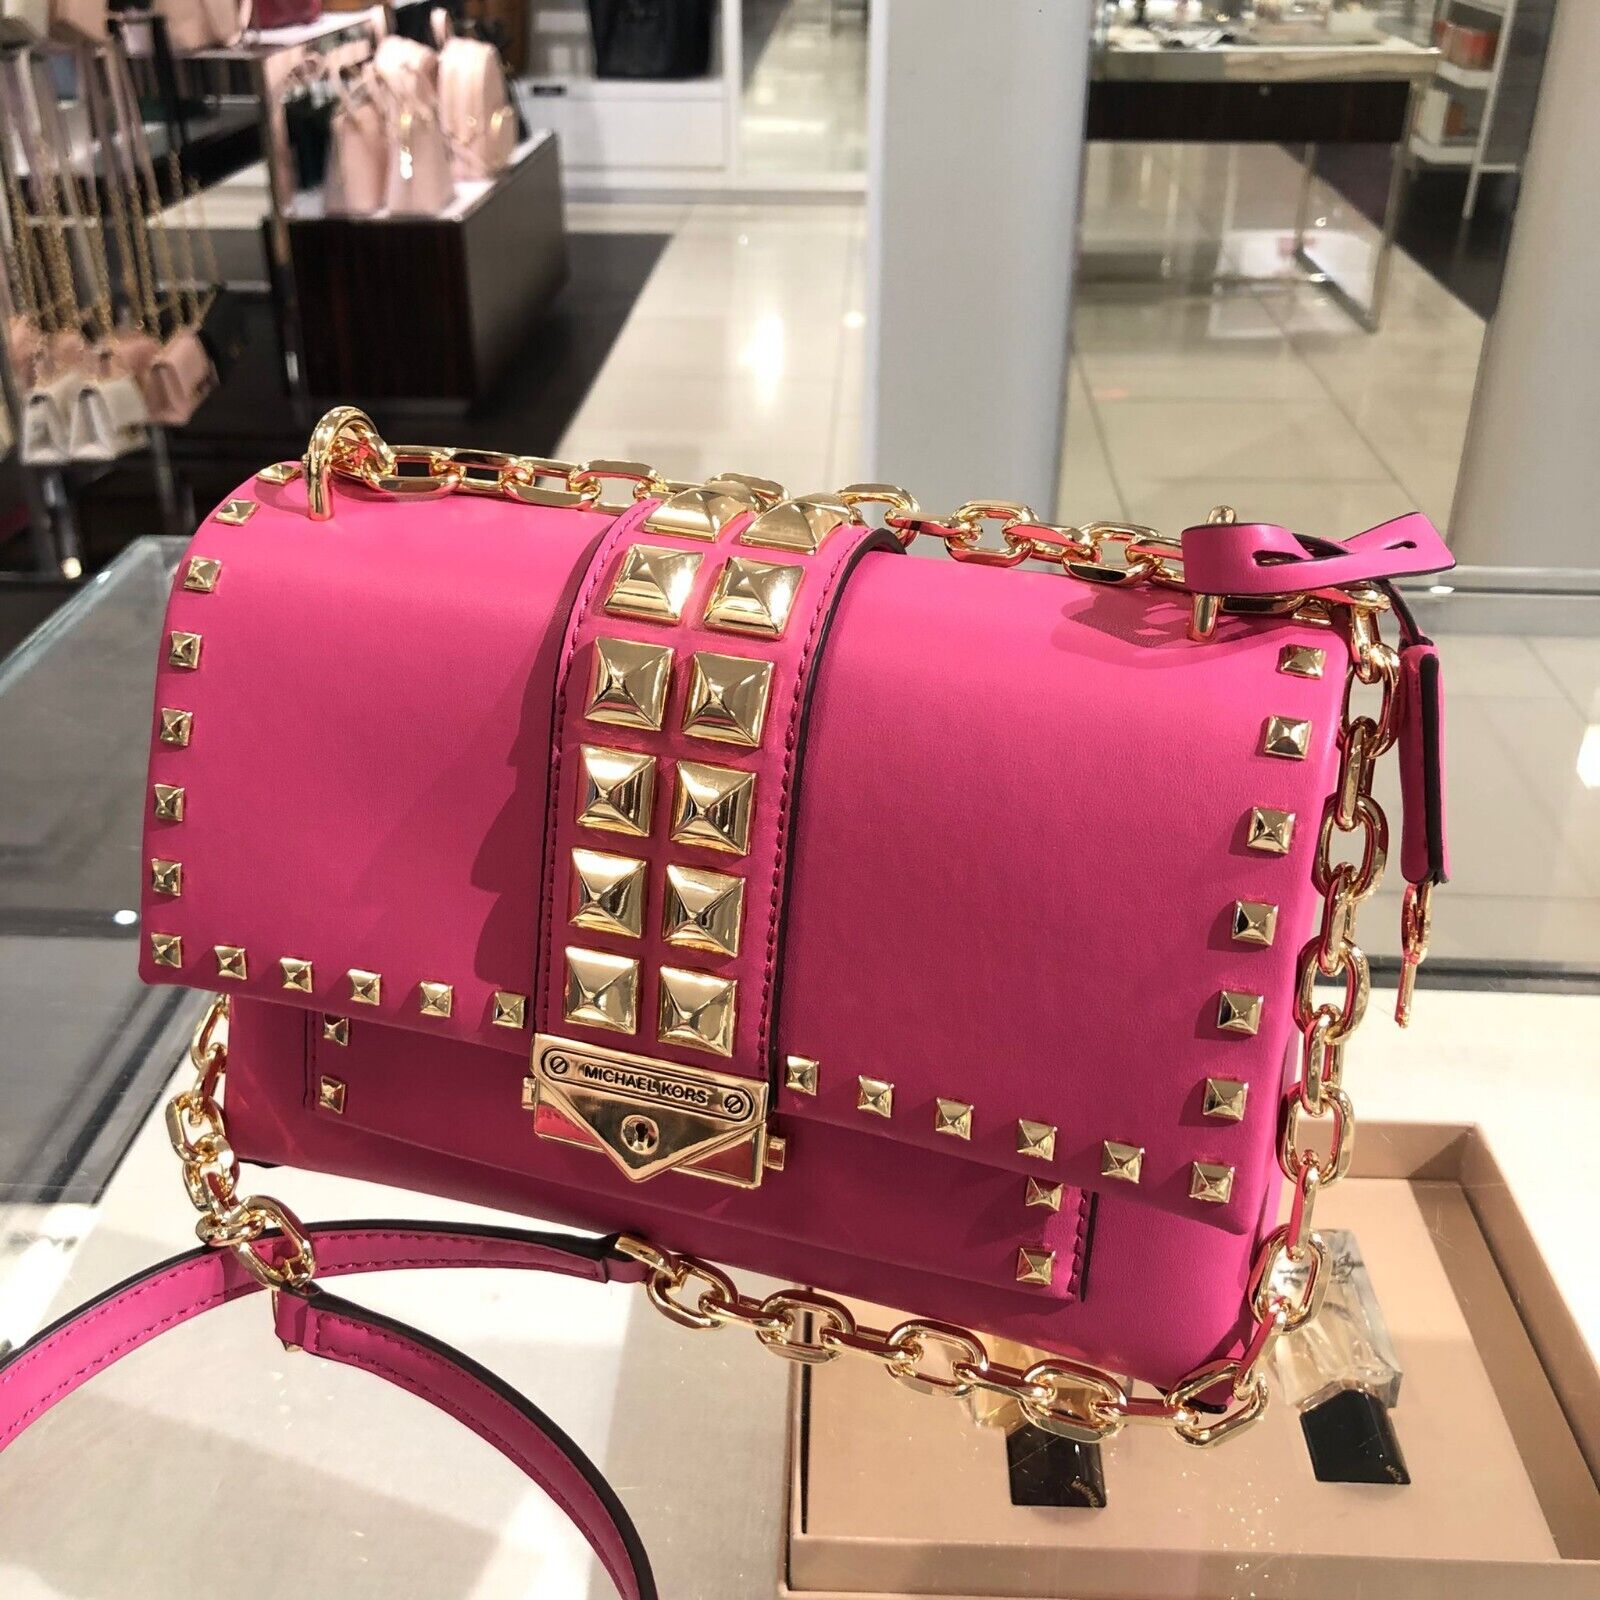 Michael Kors Handbags Women 34S2GT9W7VROSE Leather Pink Rose 120€